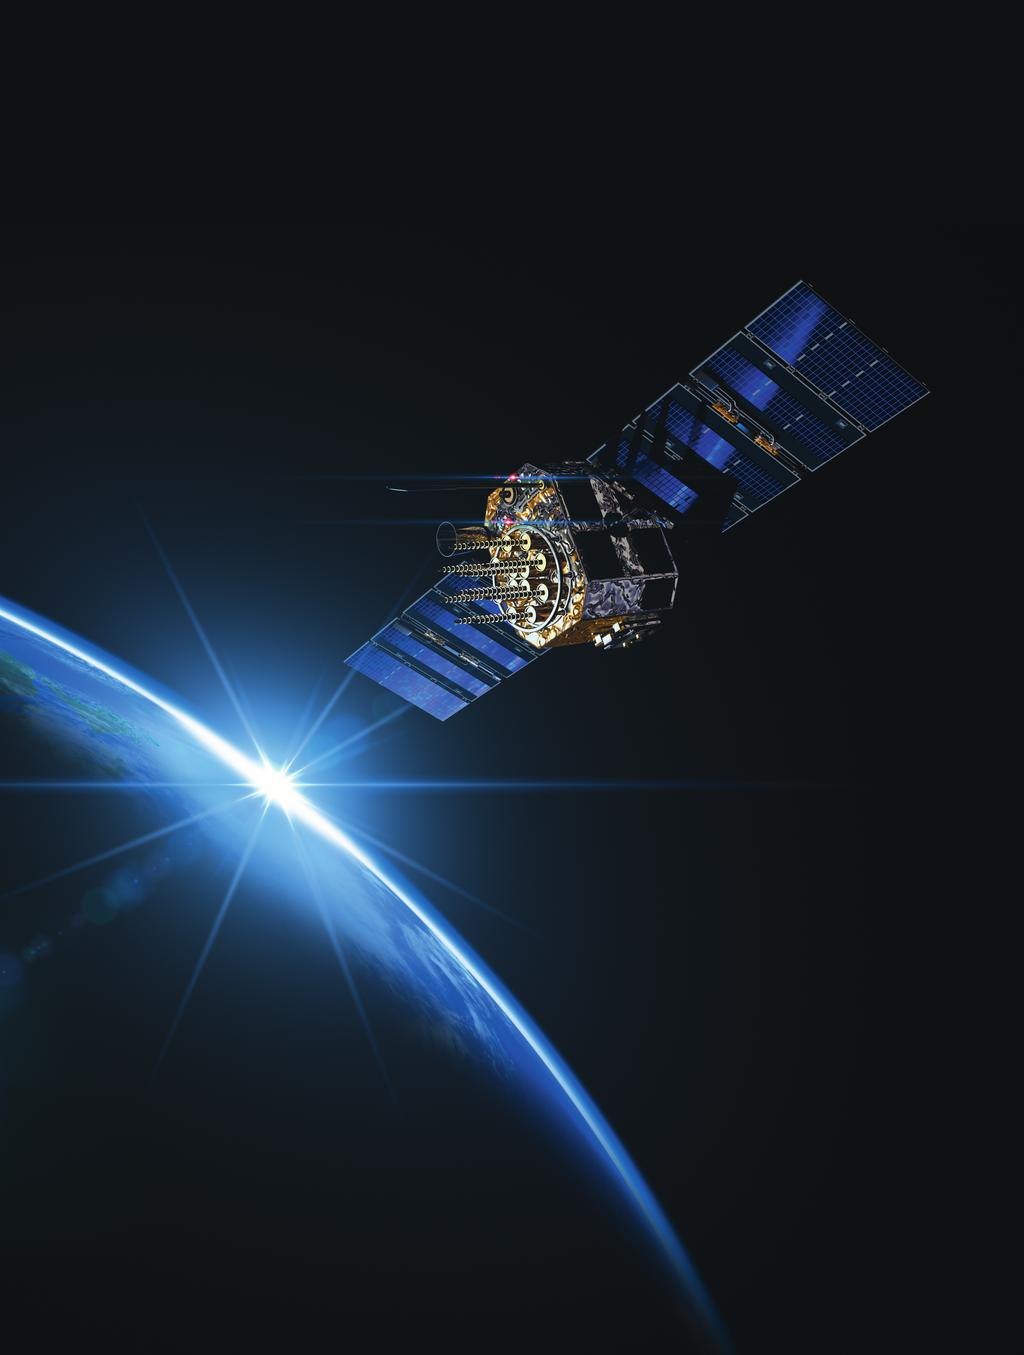 Ground station testing on satellites in orbit